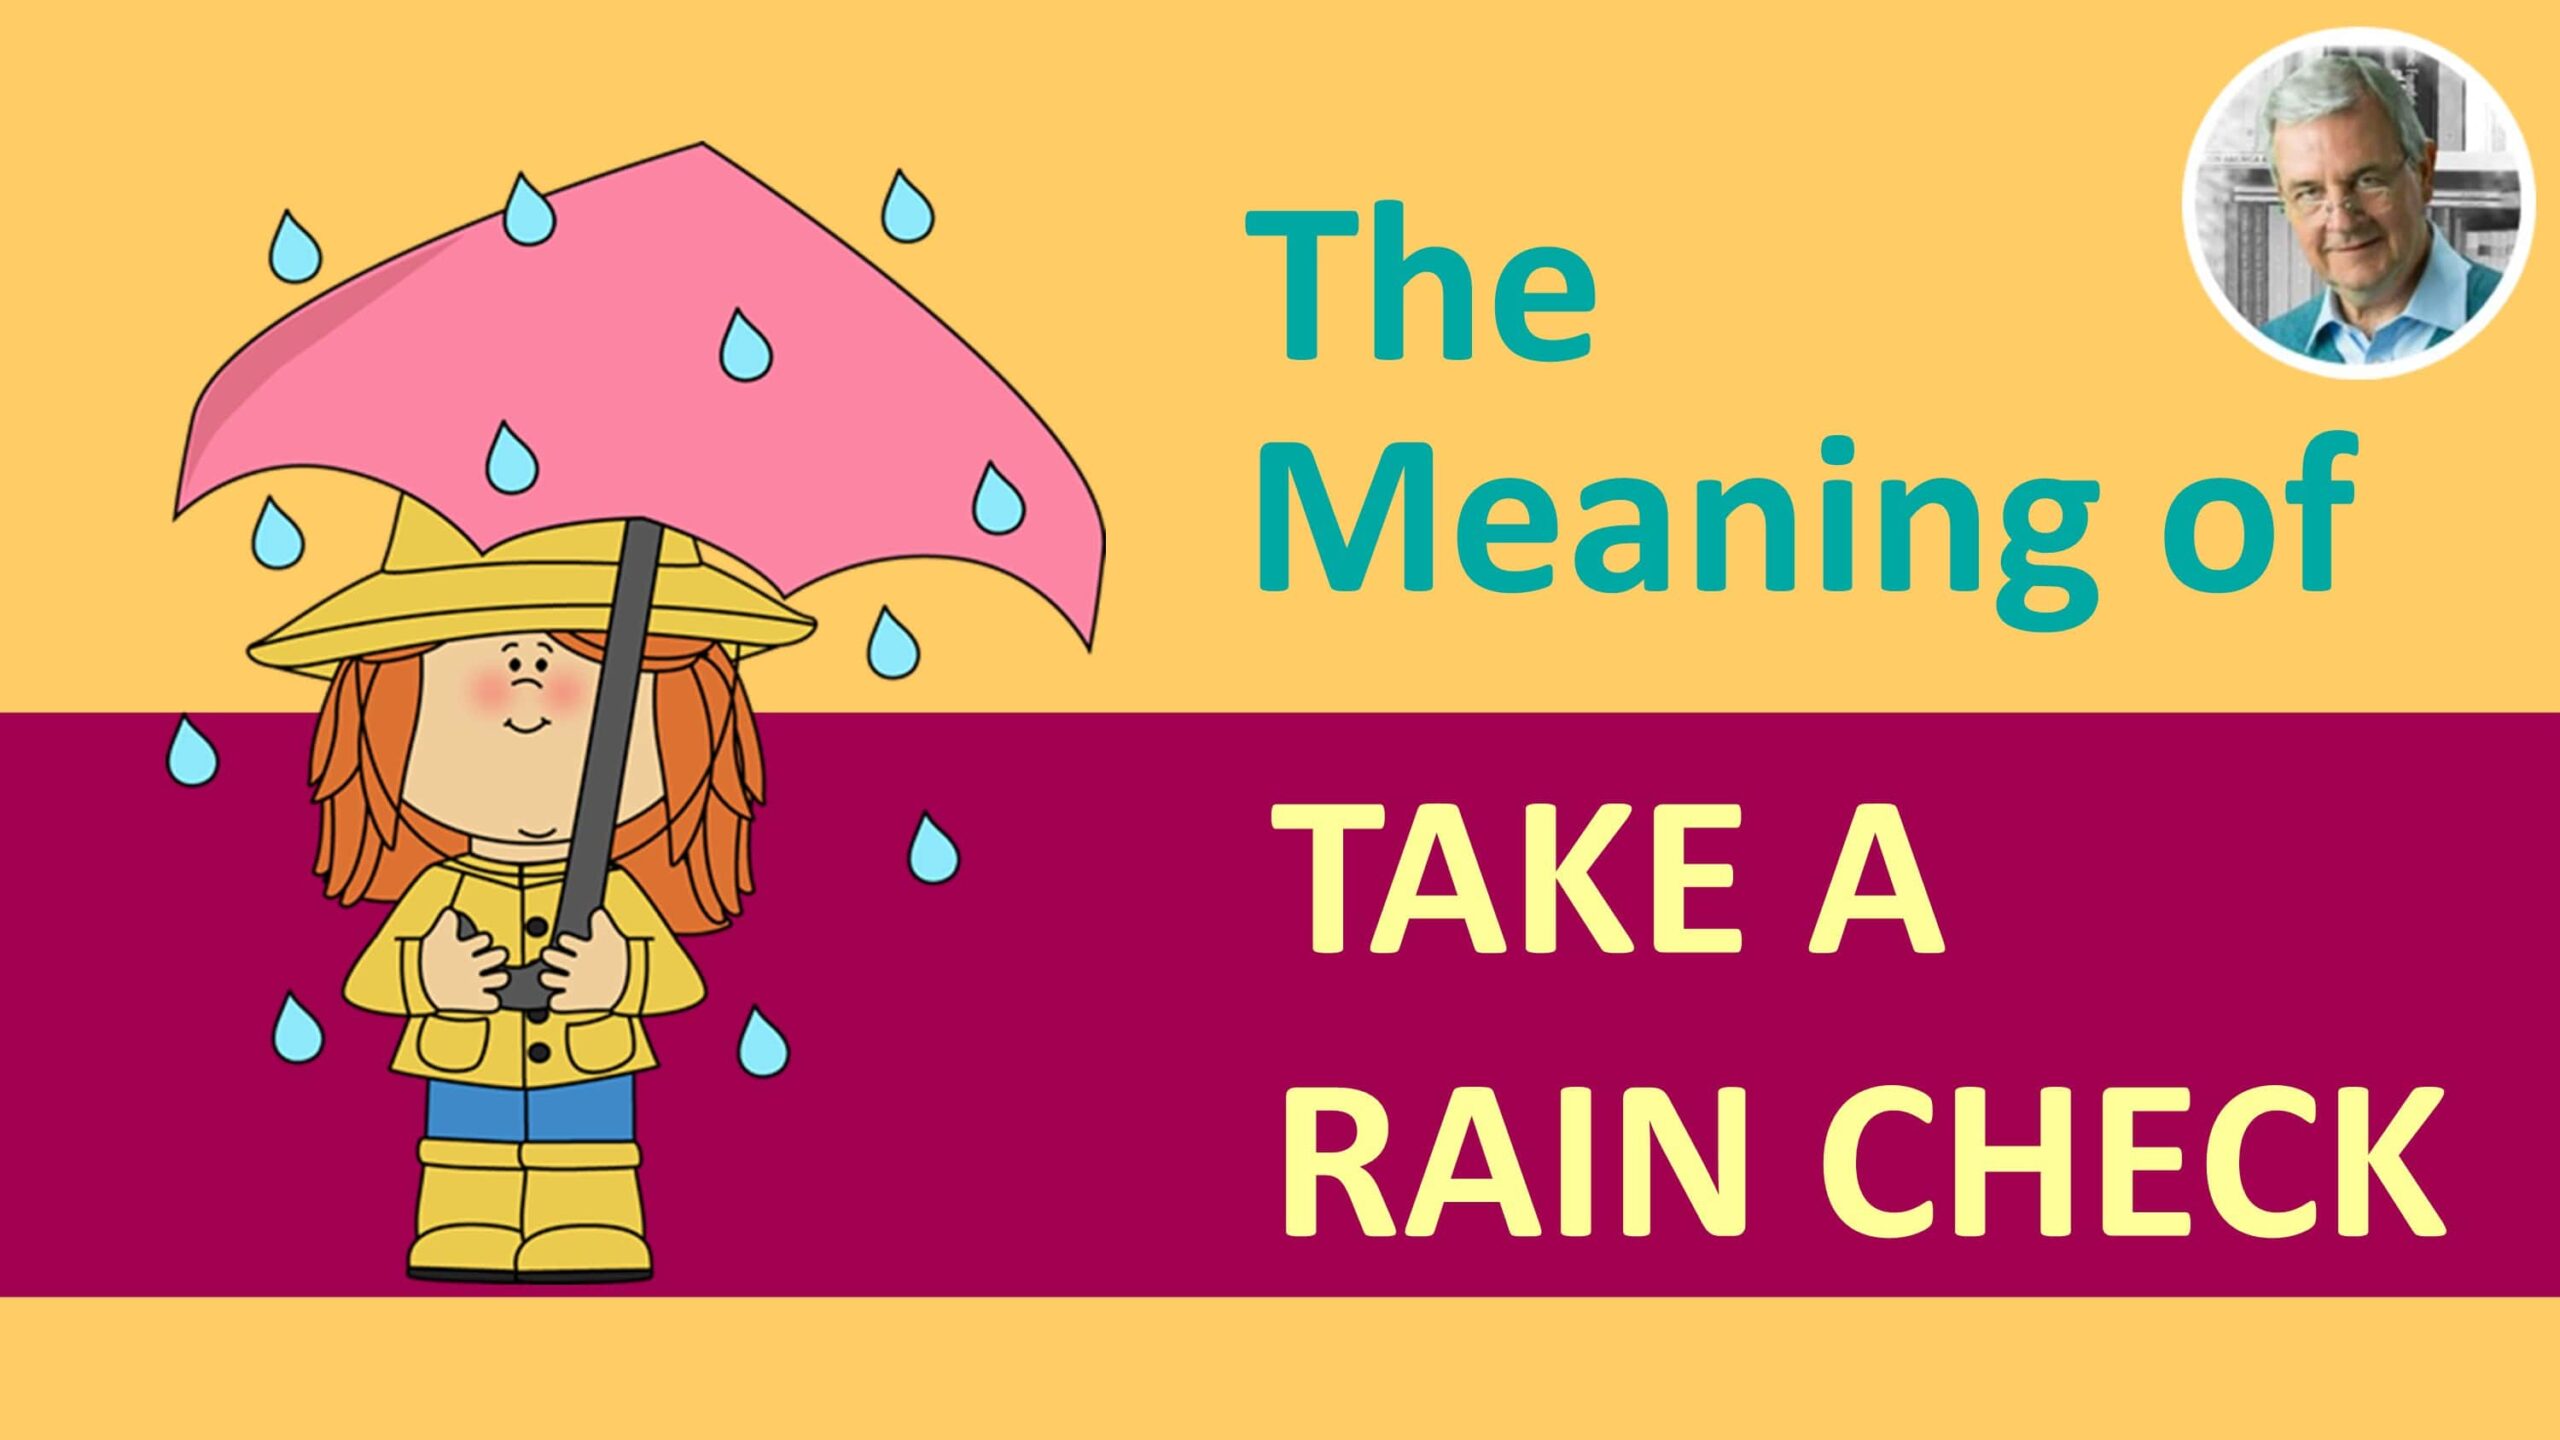 Take a rain check. Take a Rain check идиома. Rain check перевод. Check meaning. Take a Rain check idiom illustration.